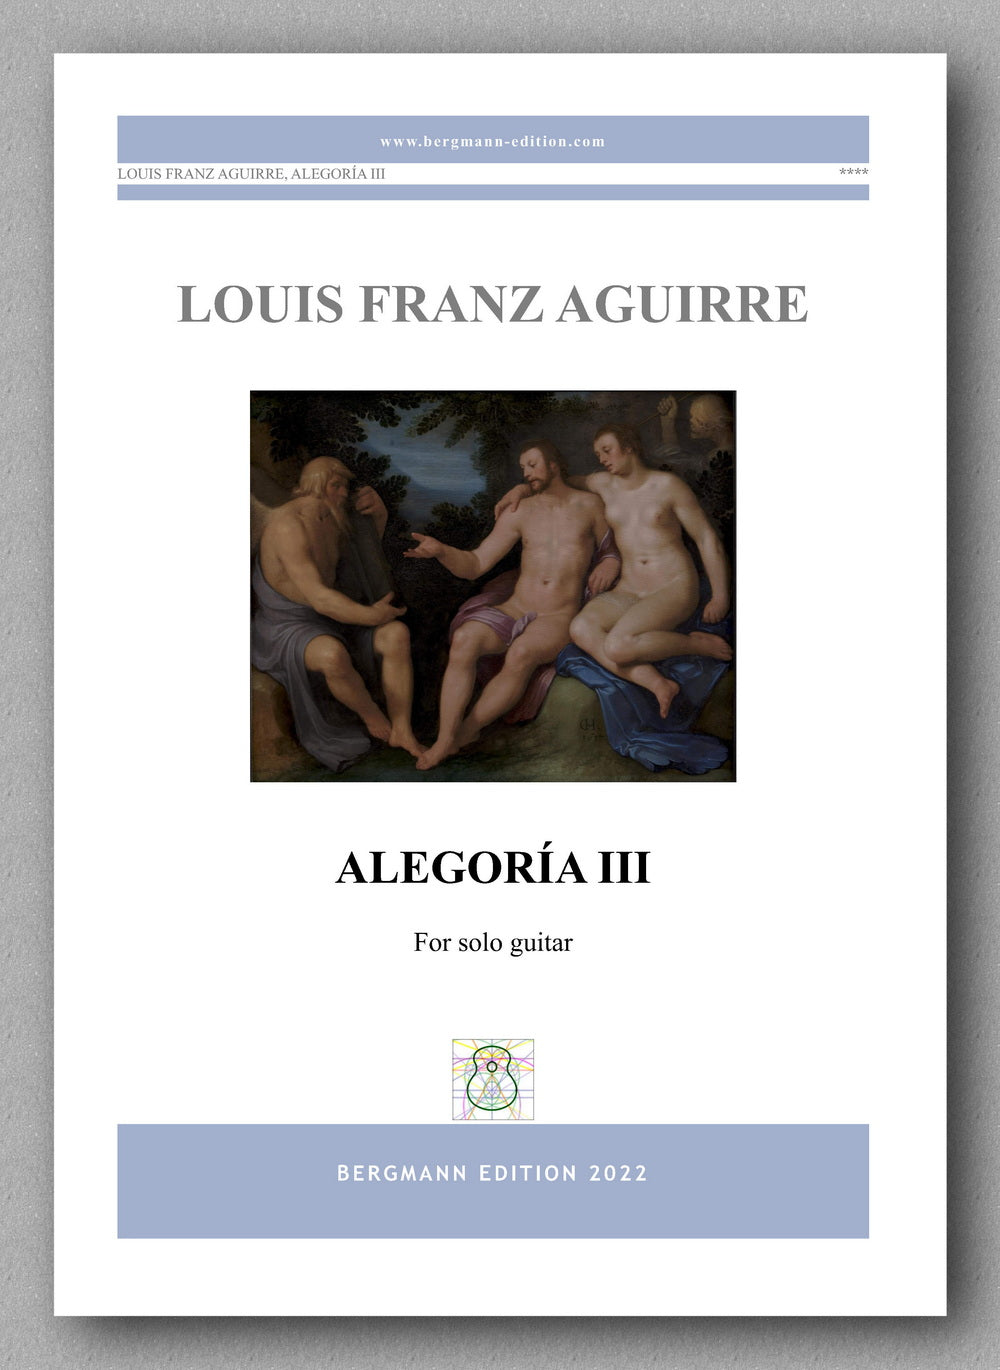 Louis Franz Aguirre, ALEGORÍA III - preview of the cover